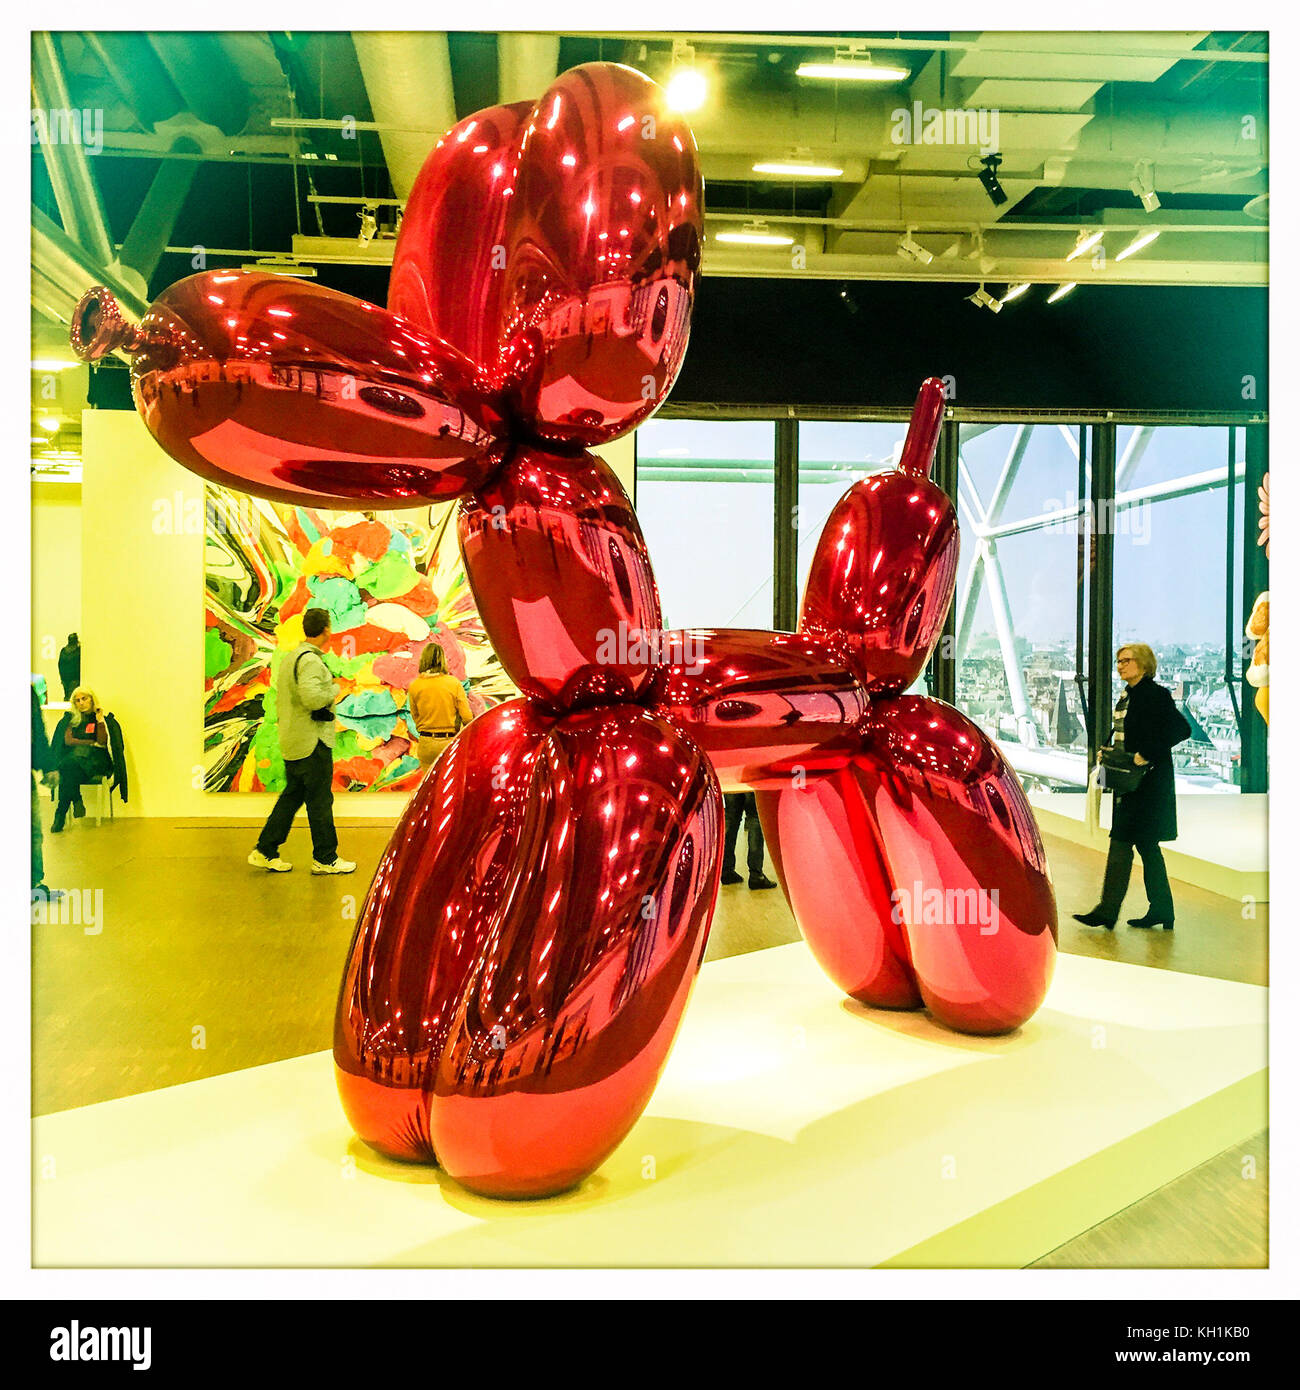 Europa, Francia, París. Jeff Koons exposición. Centro Beaubourg. "El perro de globo". Foto de stock